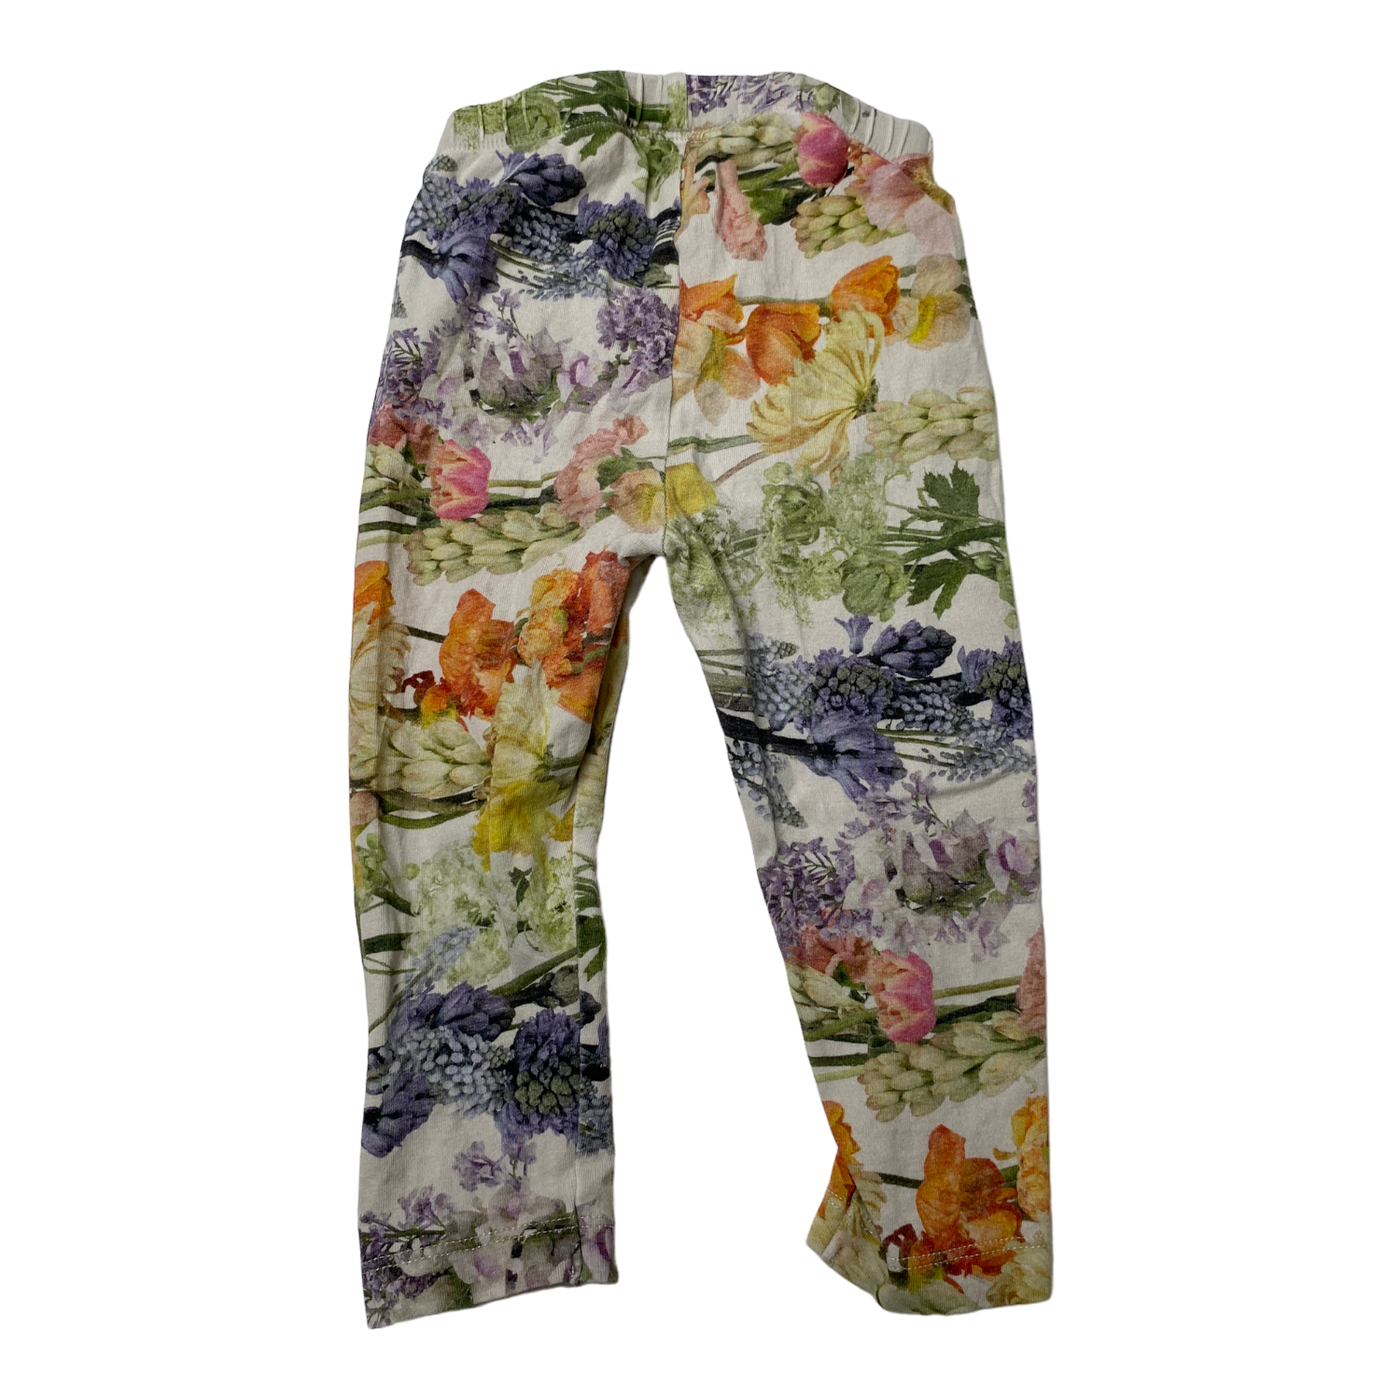 Molo stefanie leggings, rainbow bloom | 80cm